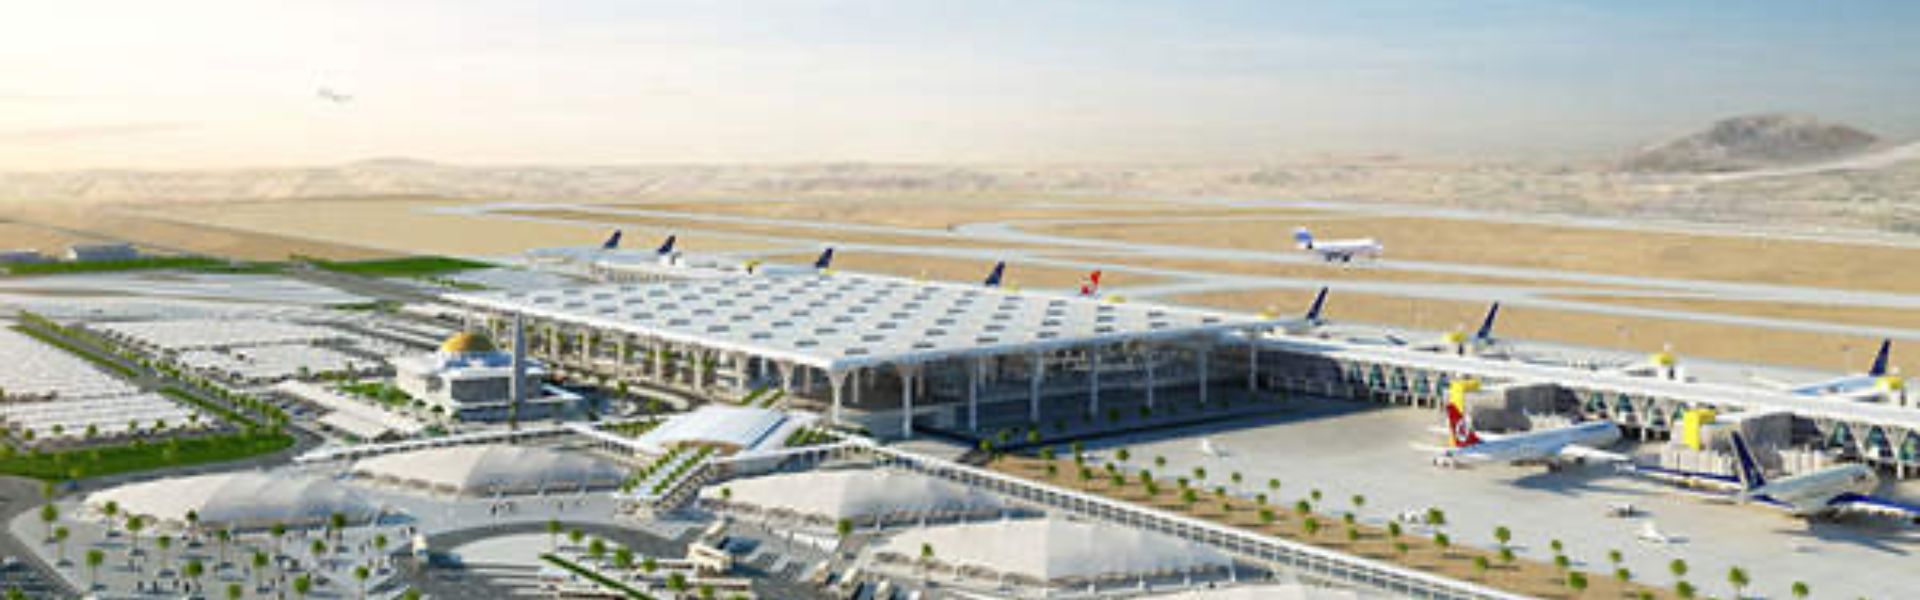 Medinah Airport